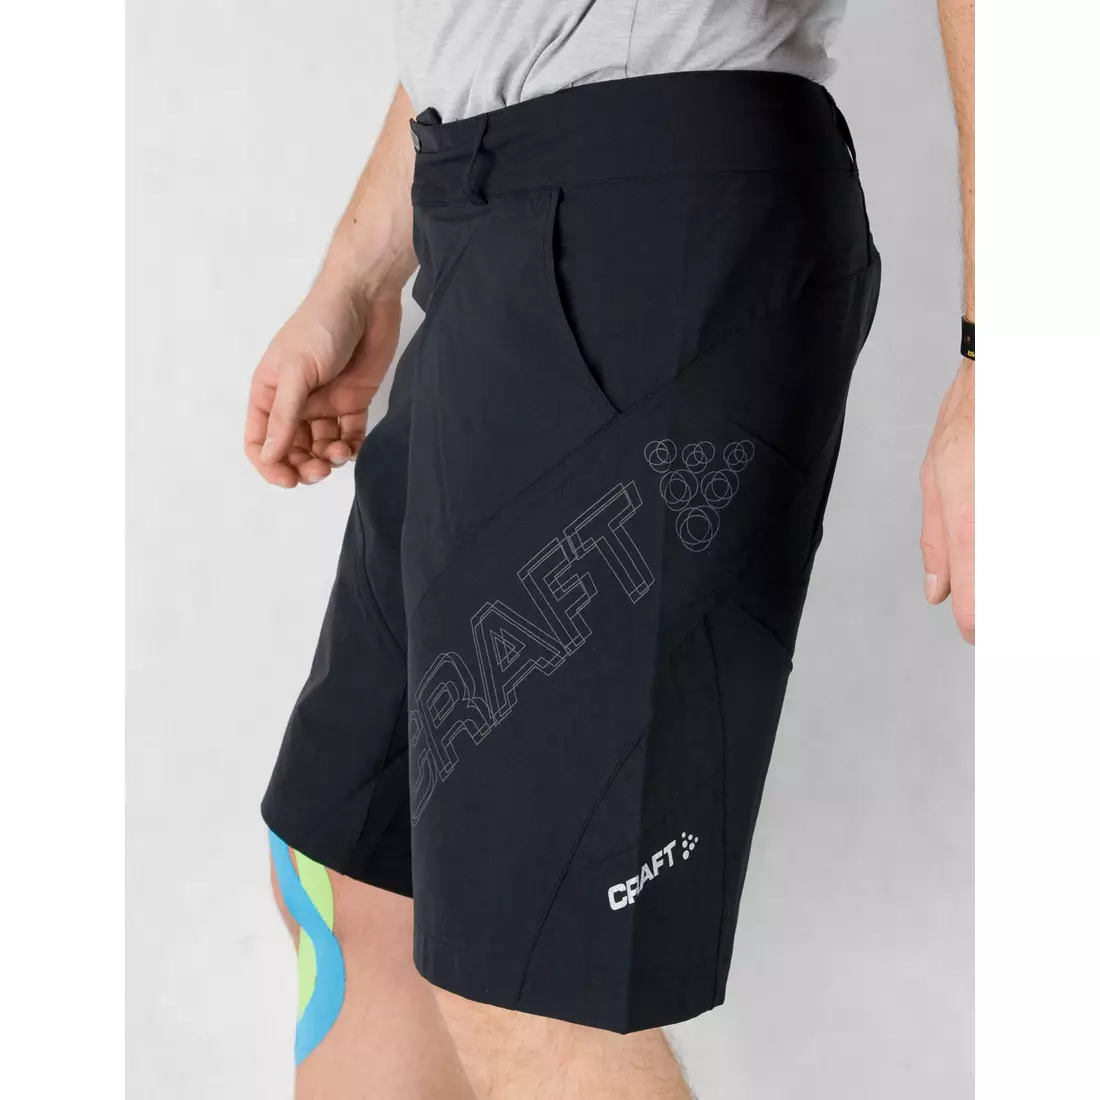 CRAFT ACTIVE BIKE - men's cycling shorts 1900700-9999, color: black